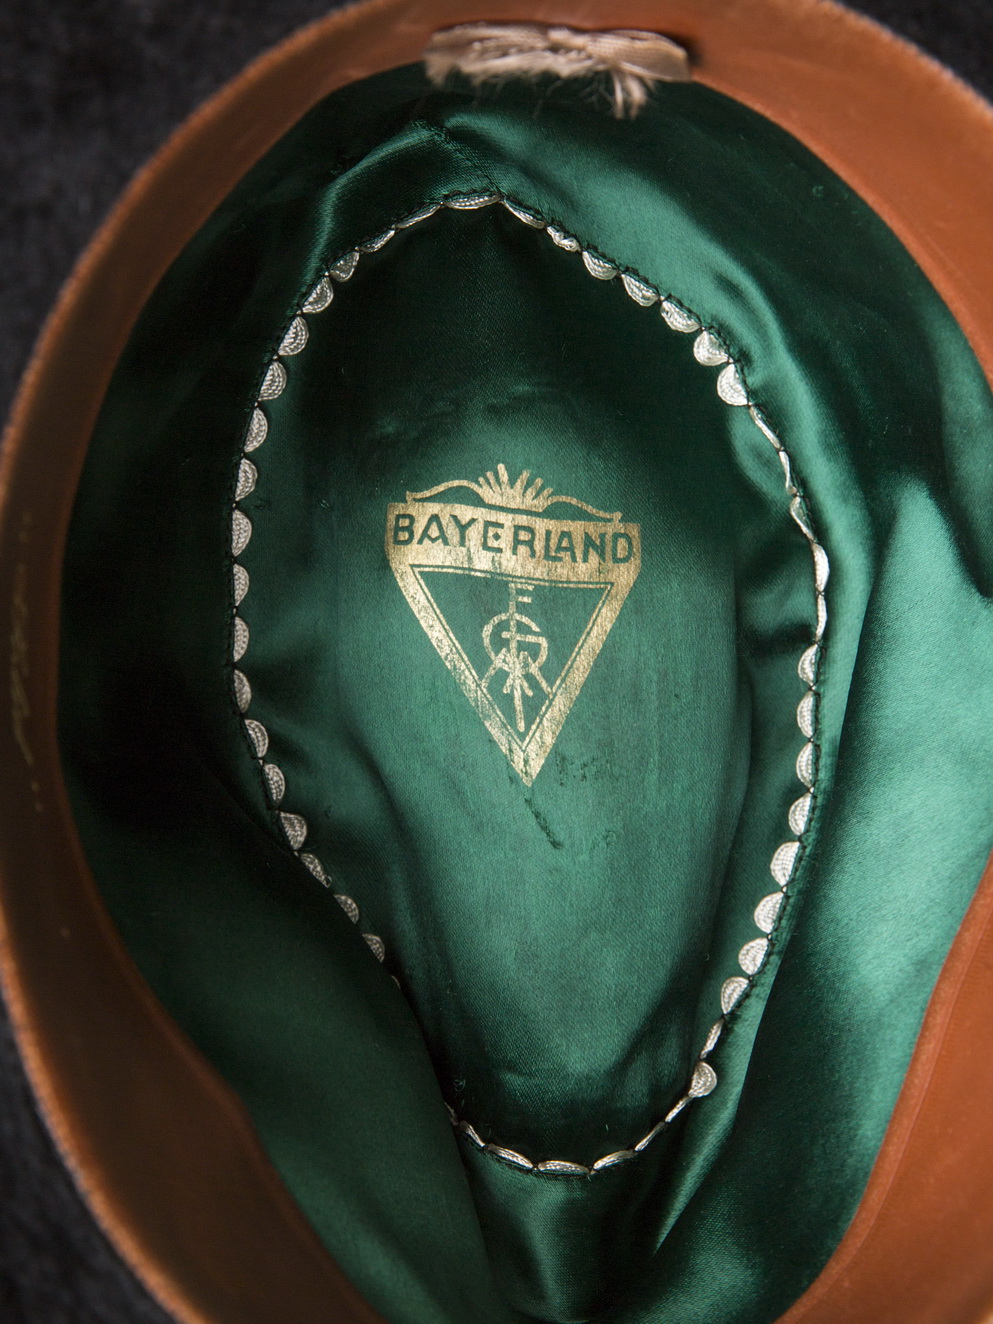 bayerland-green_07-jpg.343627